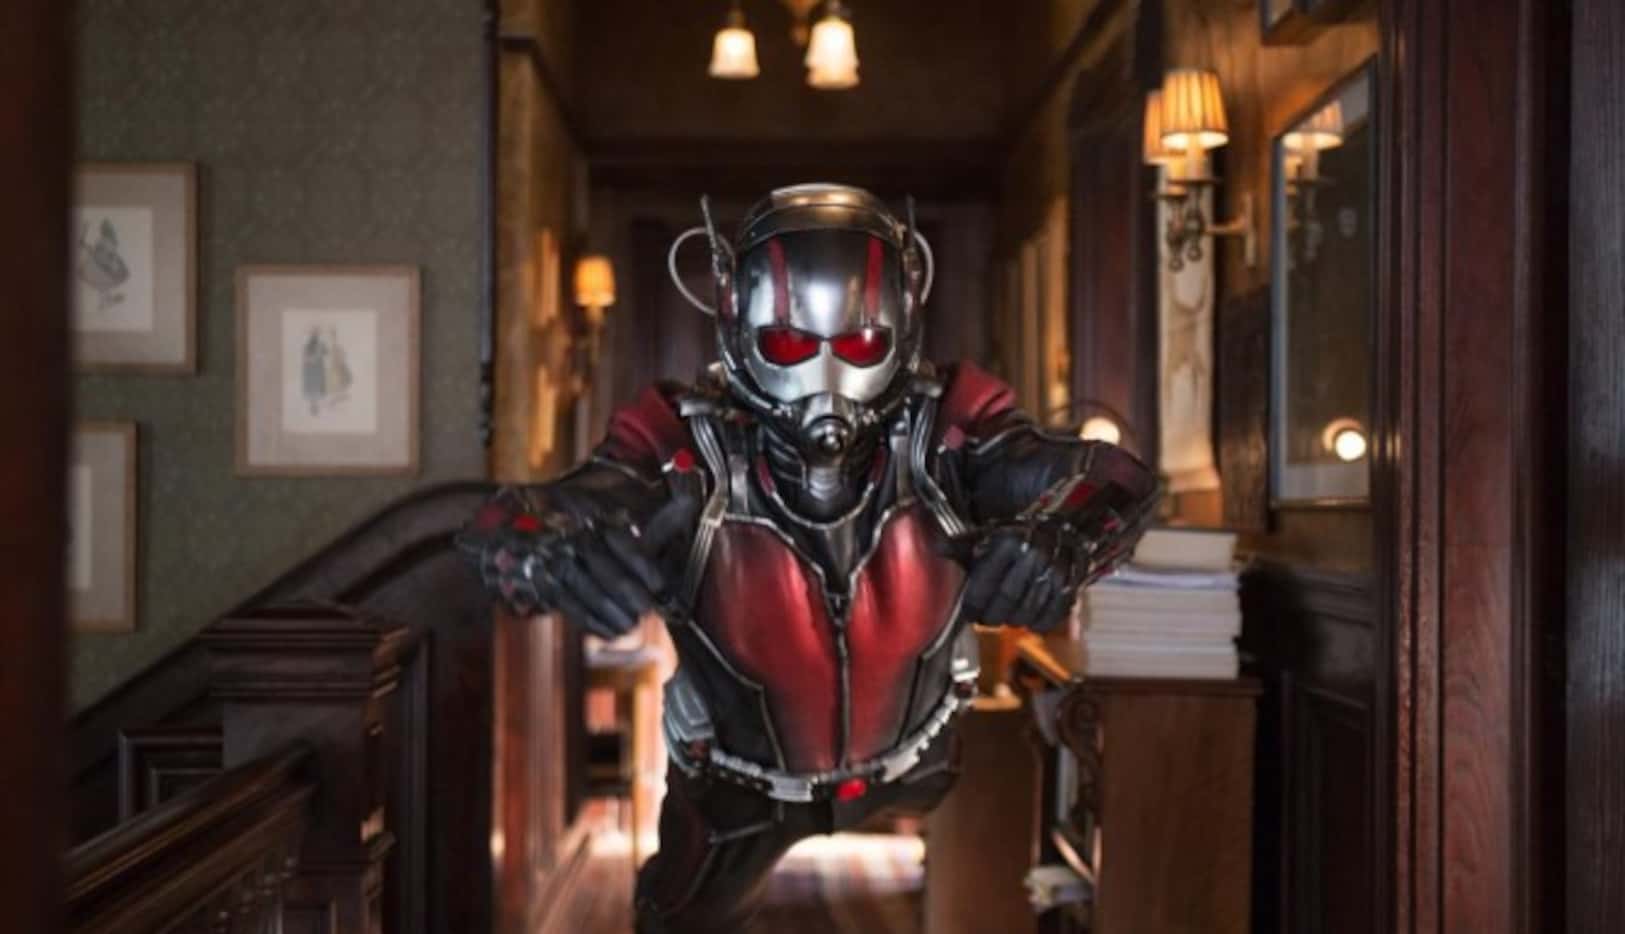 Paul Rudd interpreta a Scott Lang/Ant-Man en esta nueva cinta de superhéroes. (AP/MARVEL)
